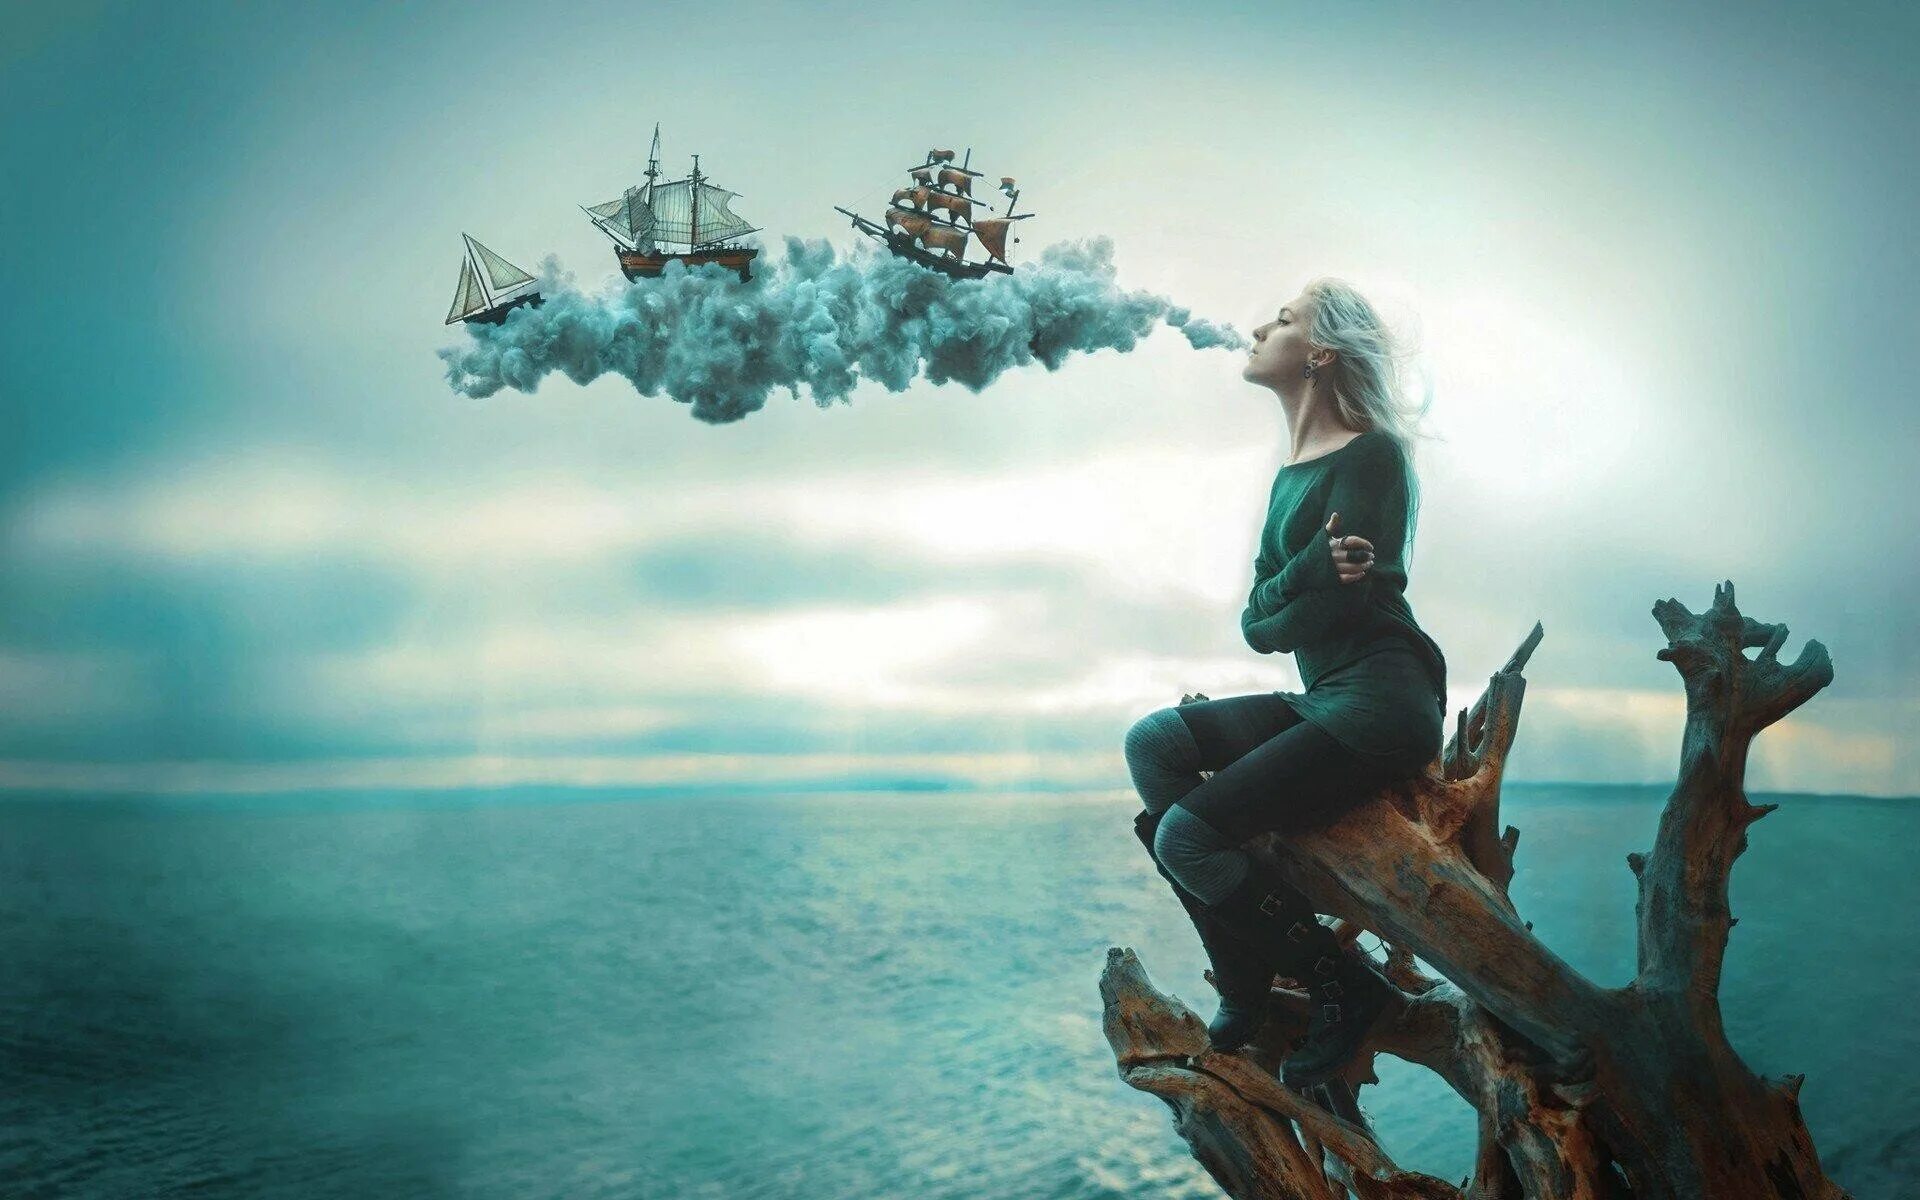 Девушка на корабле. Девушка-море. Фотосессия в стиле фантастика. Фантастическое море. Дух вдохновения